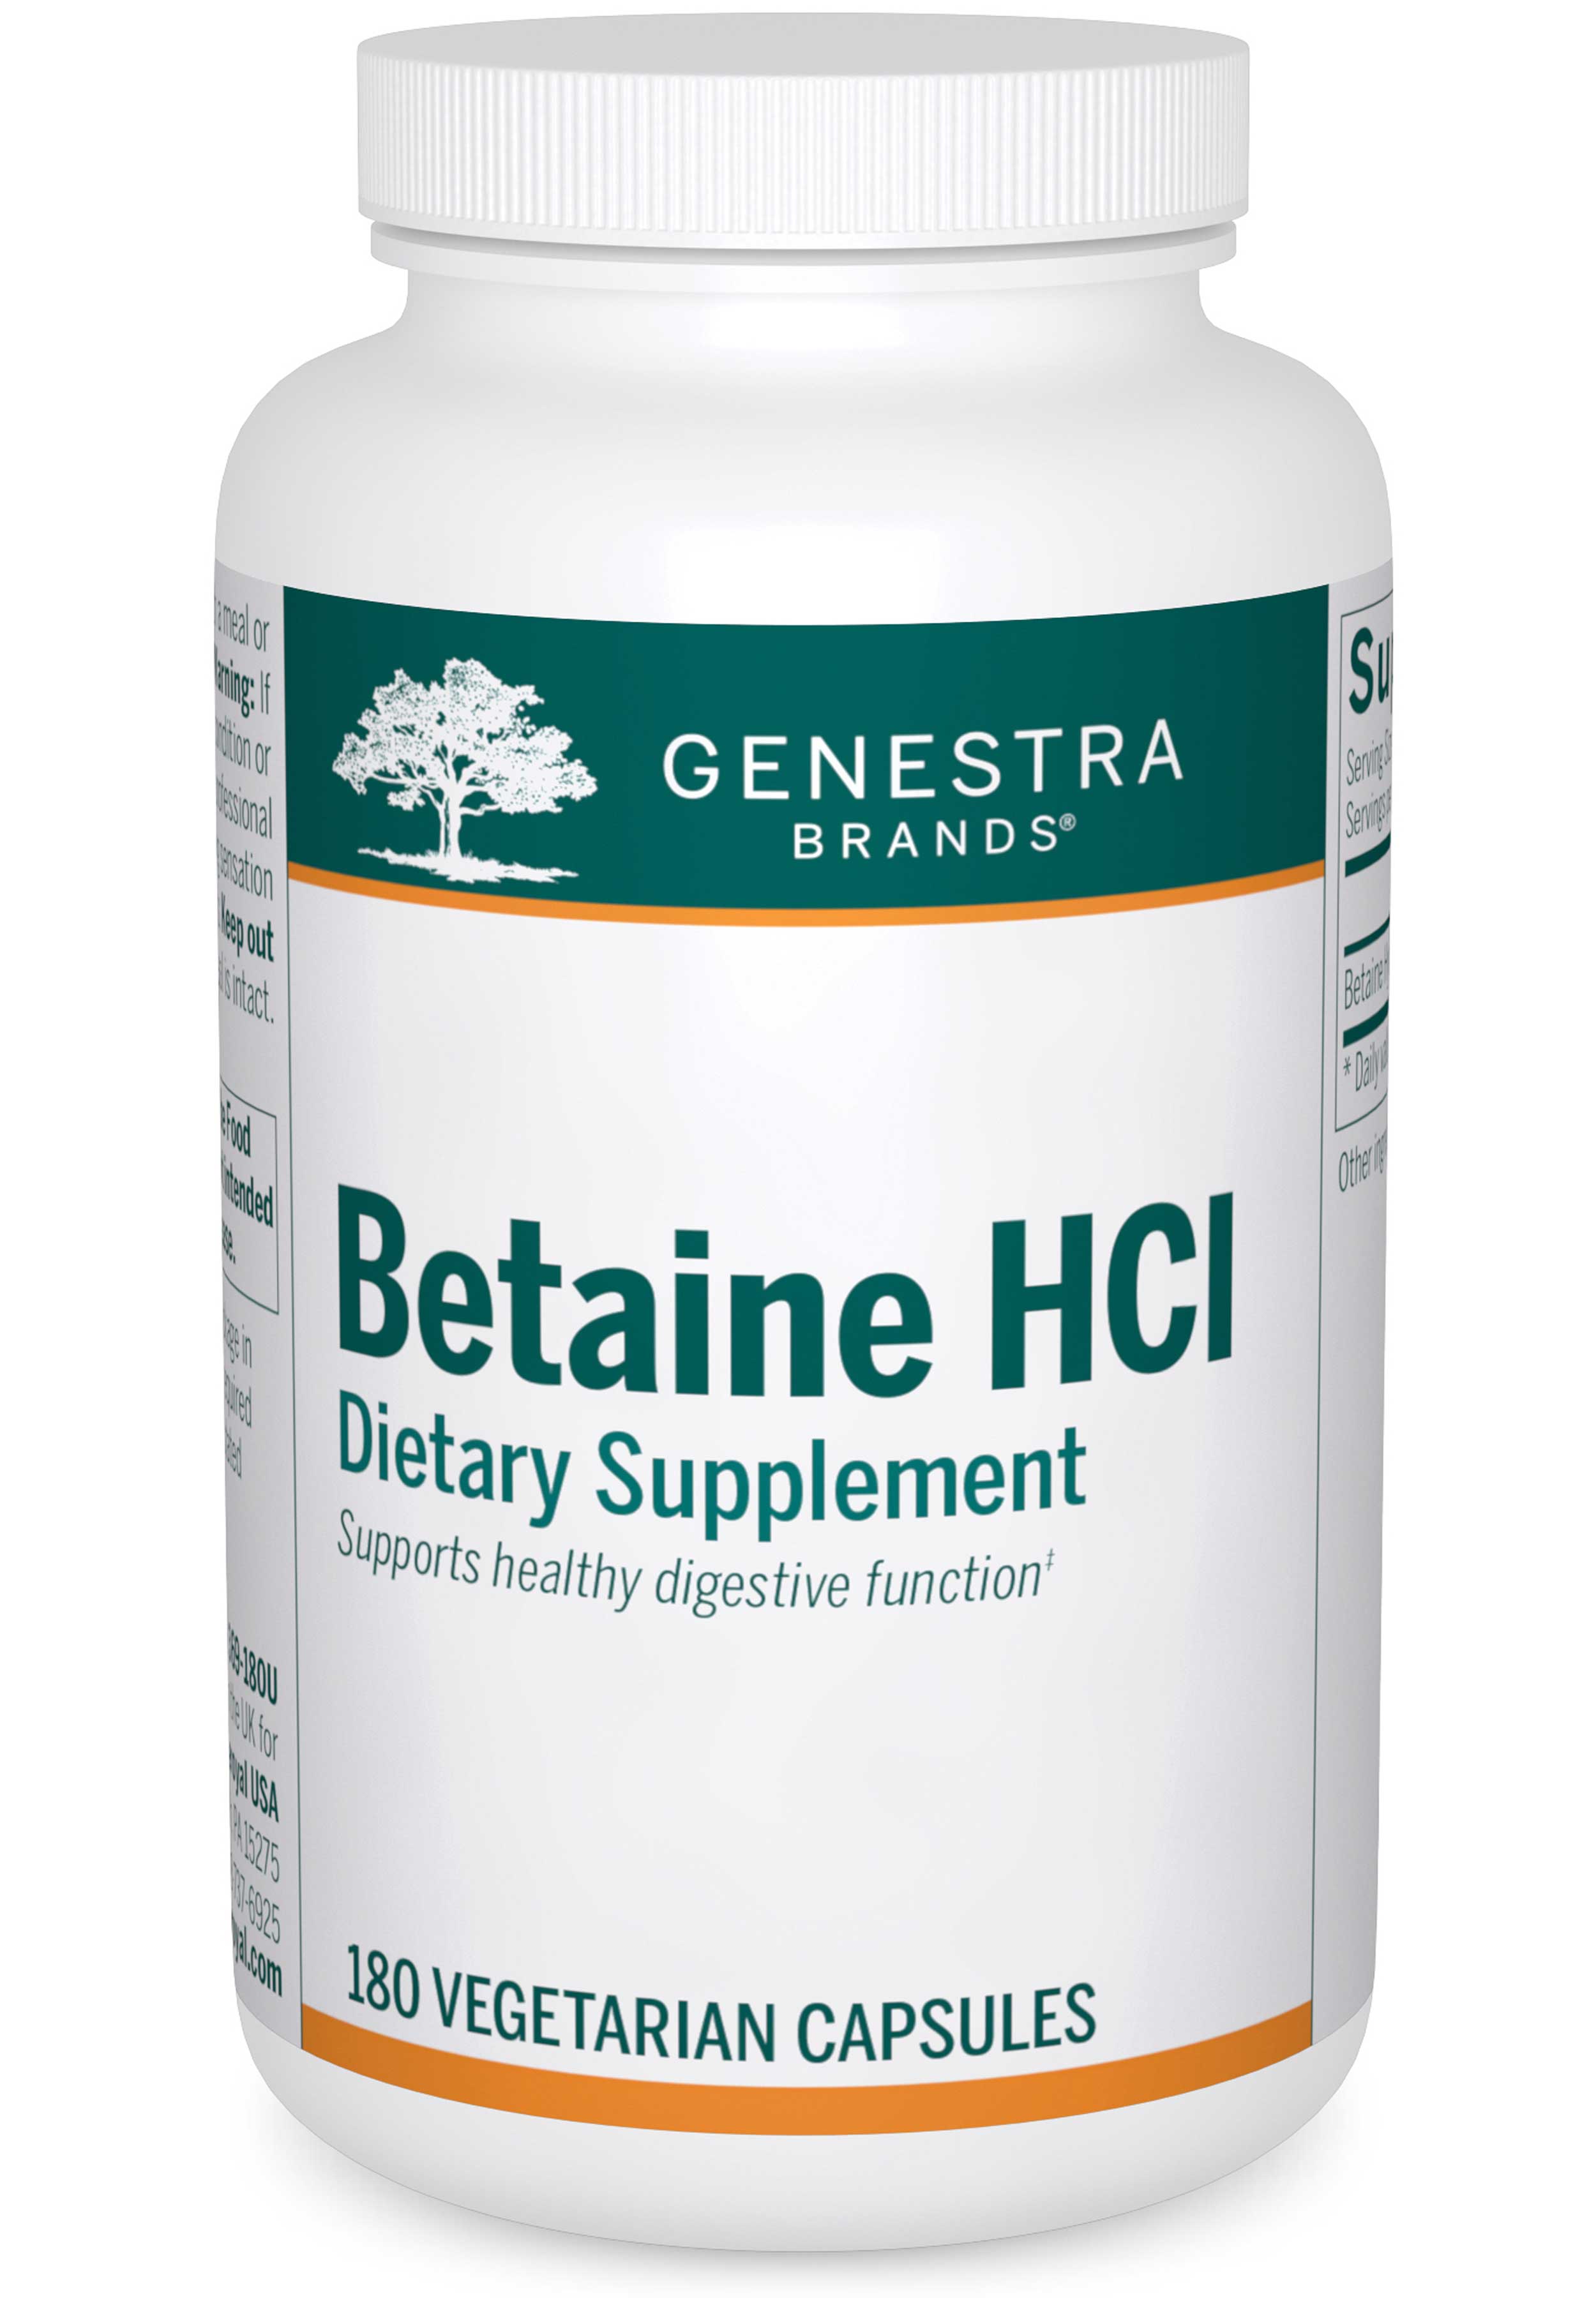 Genestra Brands Betaine HCl